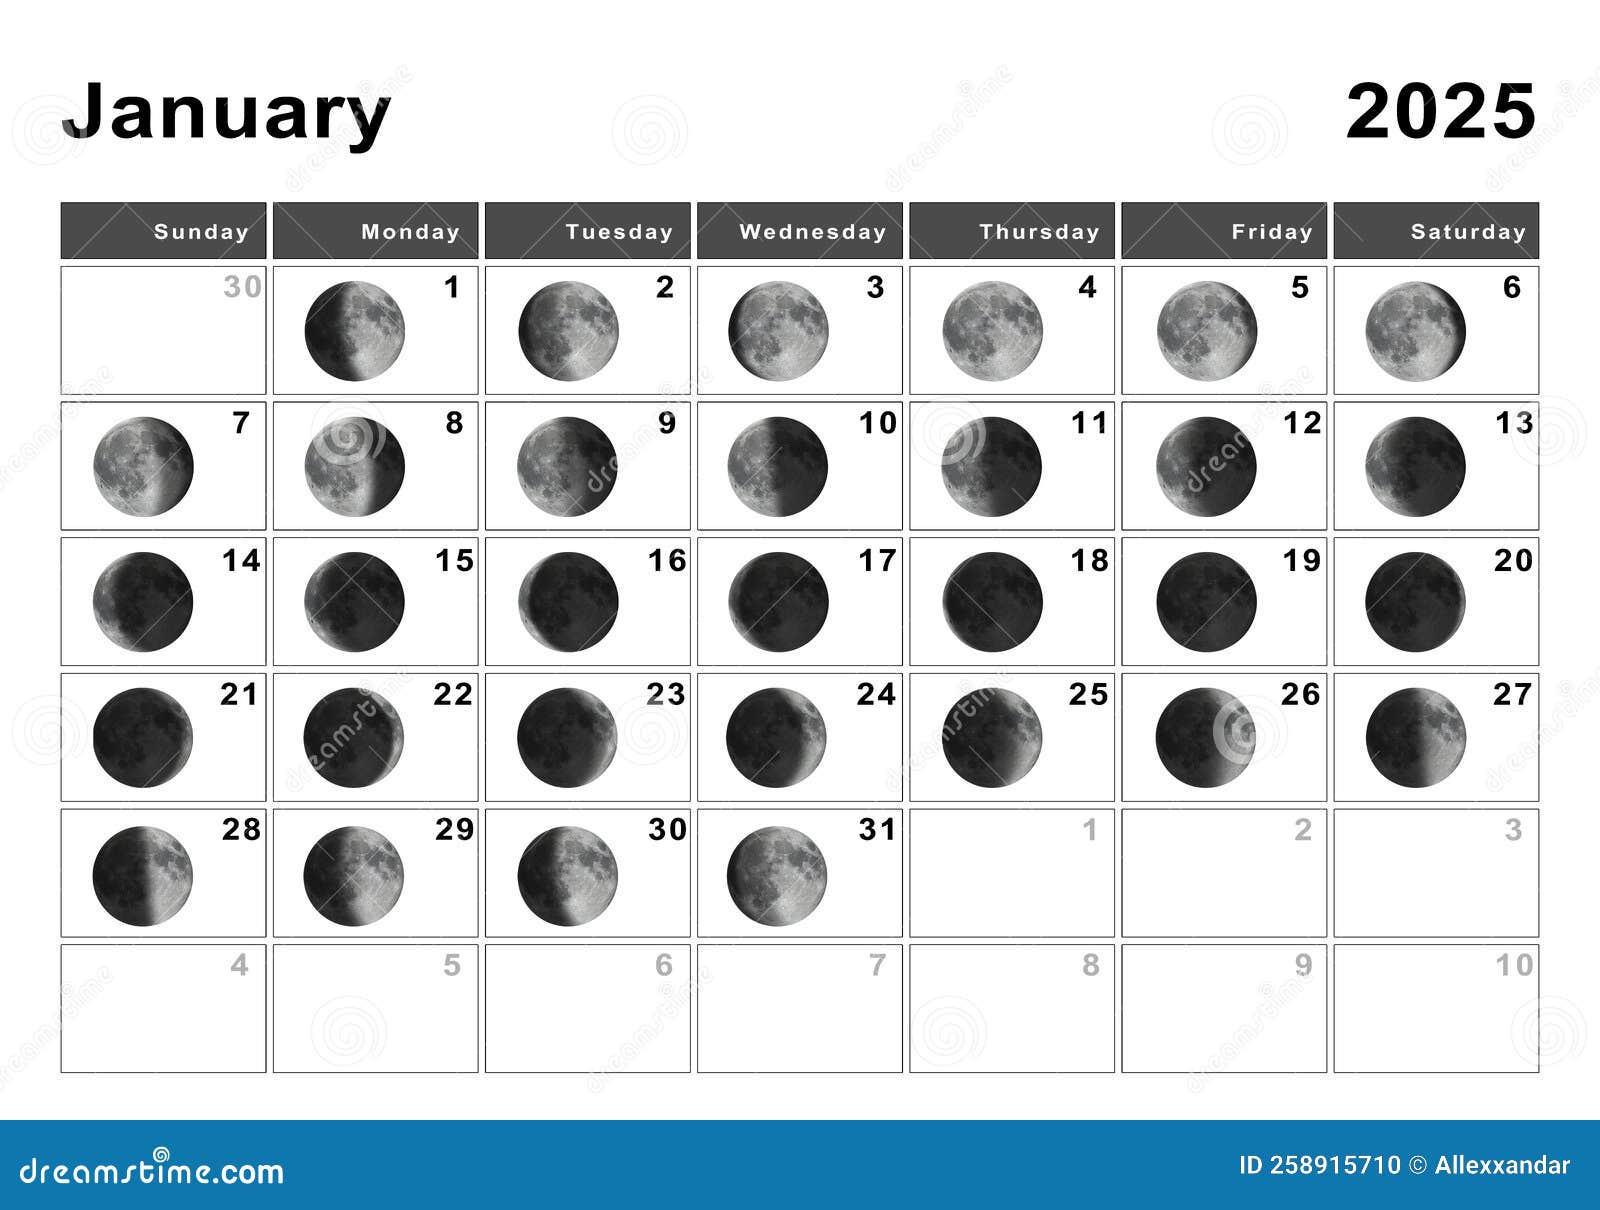 december-2025-lunar-calendar-moon-cycles-stock-illustration-illustration-of-number-planning